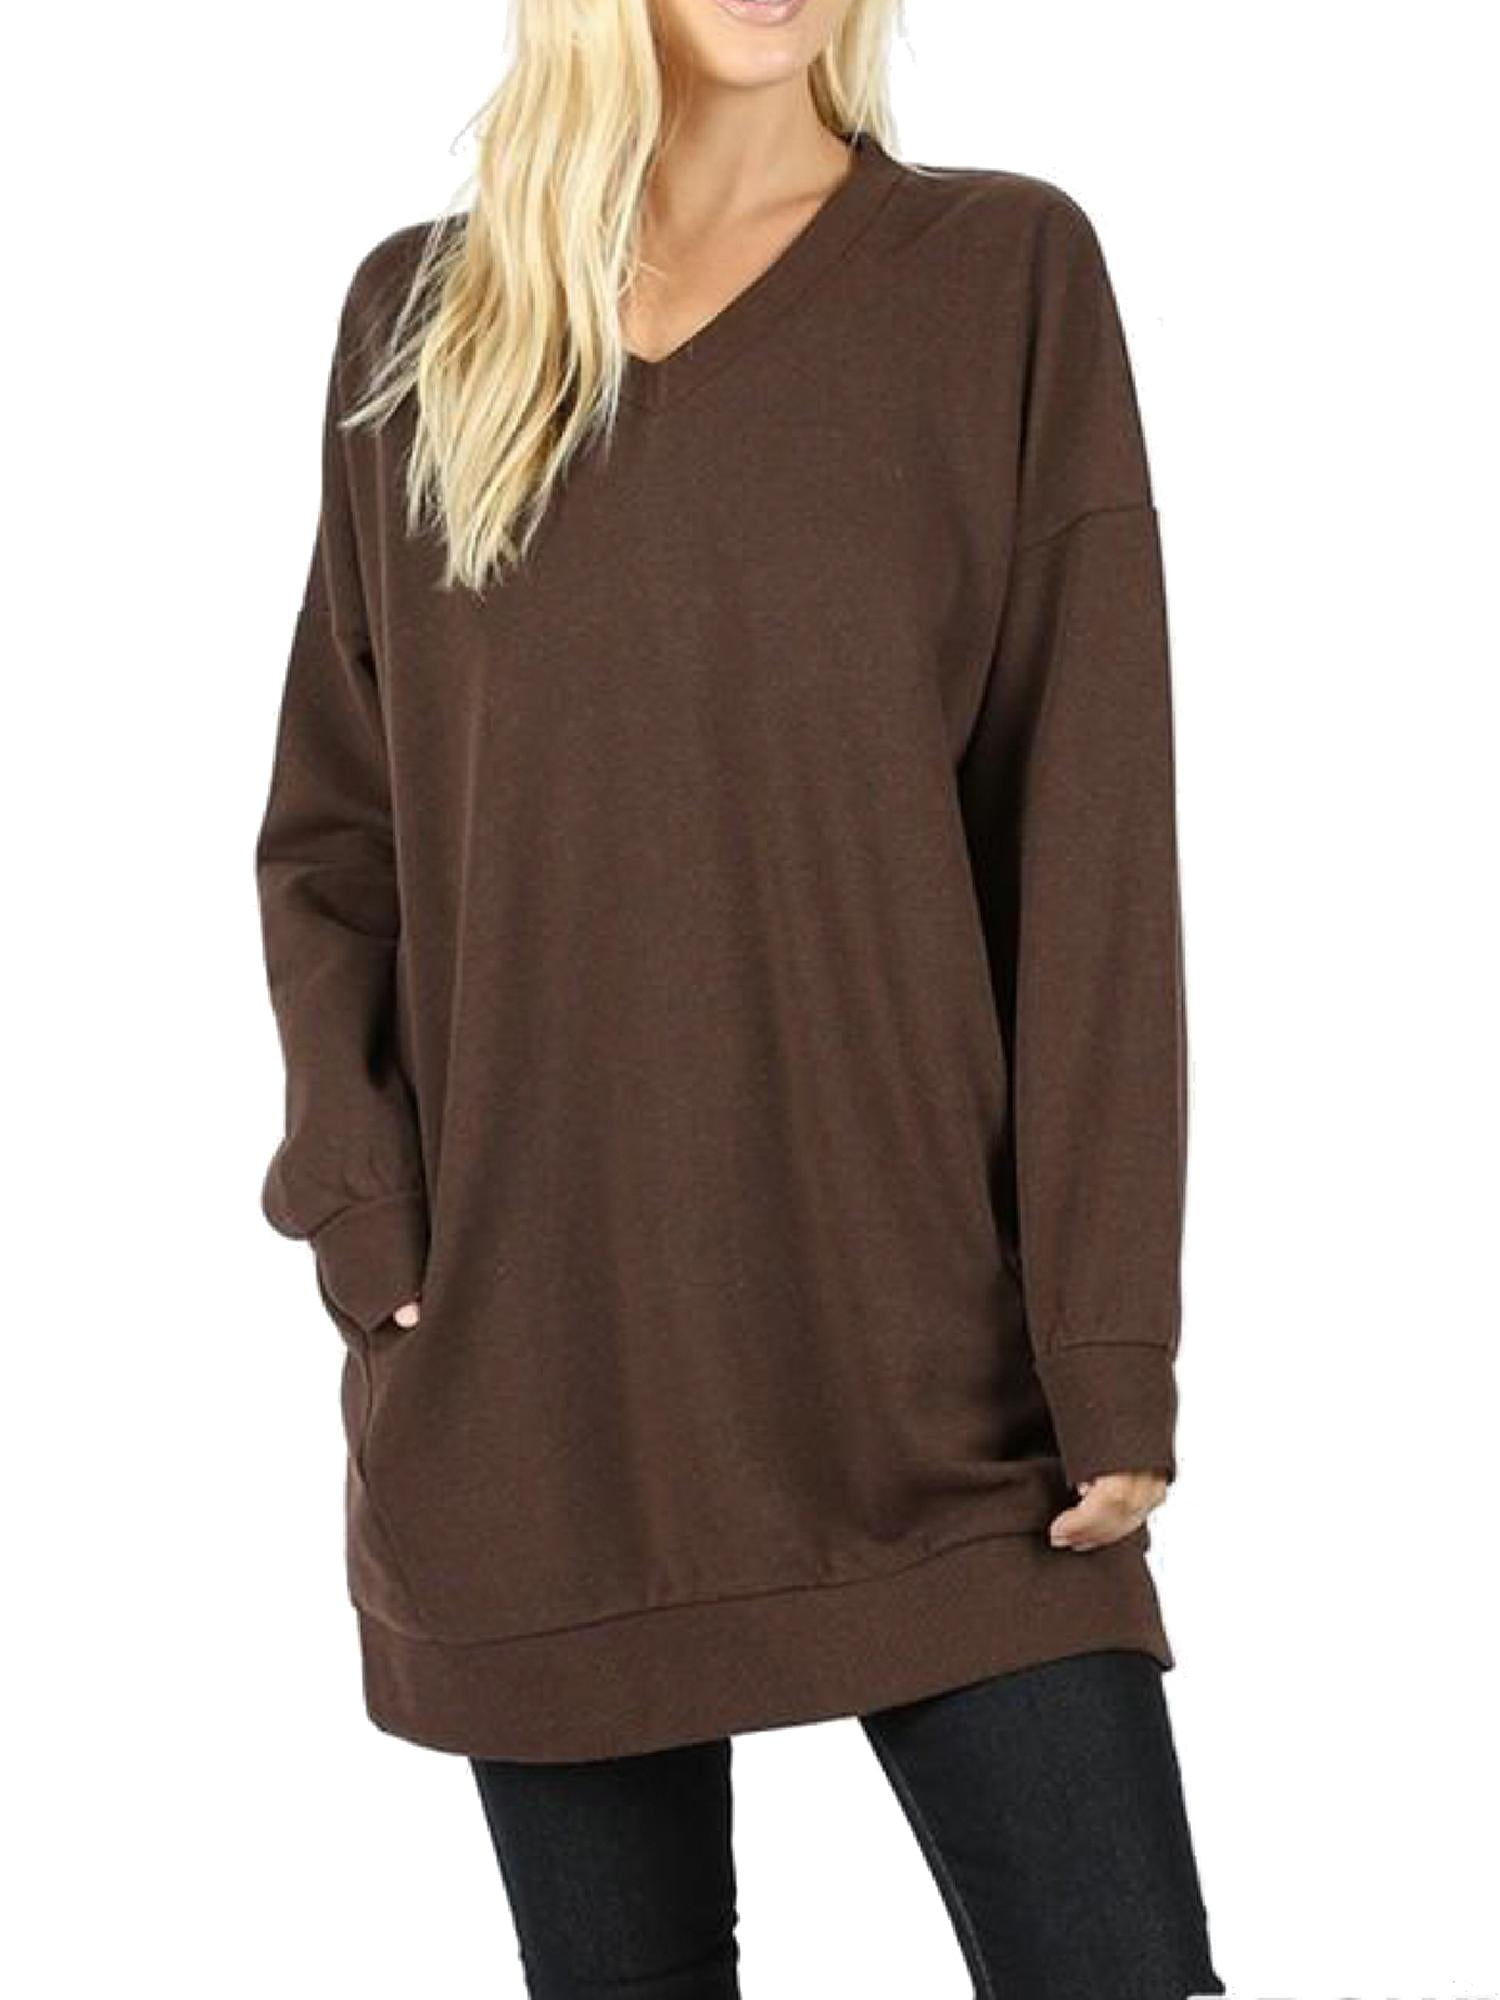 MixMatchy Women's Casual Oversized V-Neck Sweatshirts Loose Fit ...